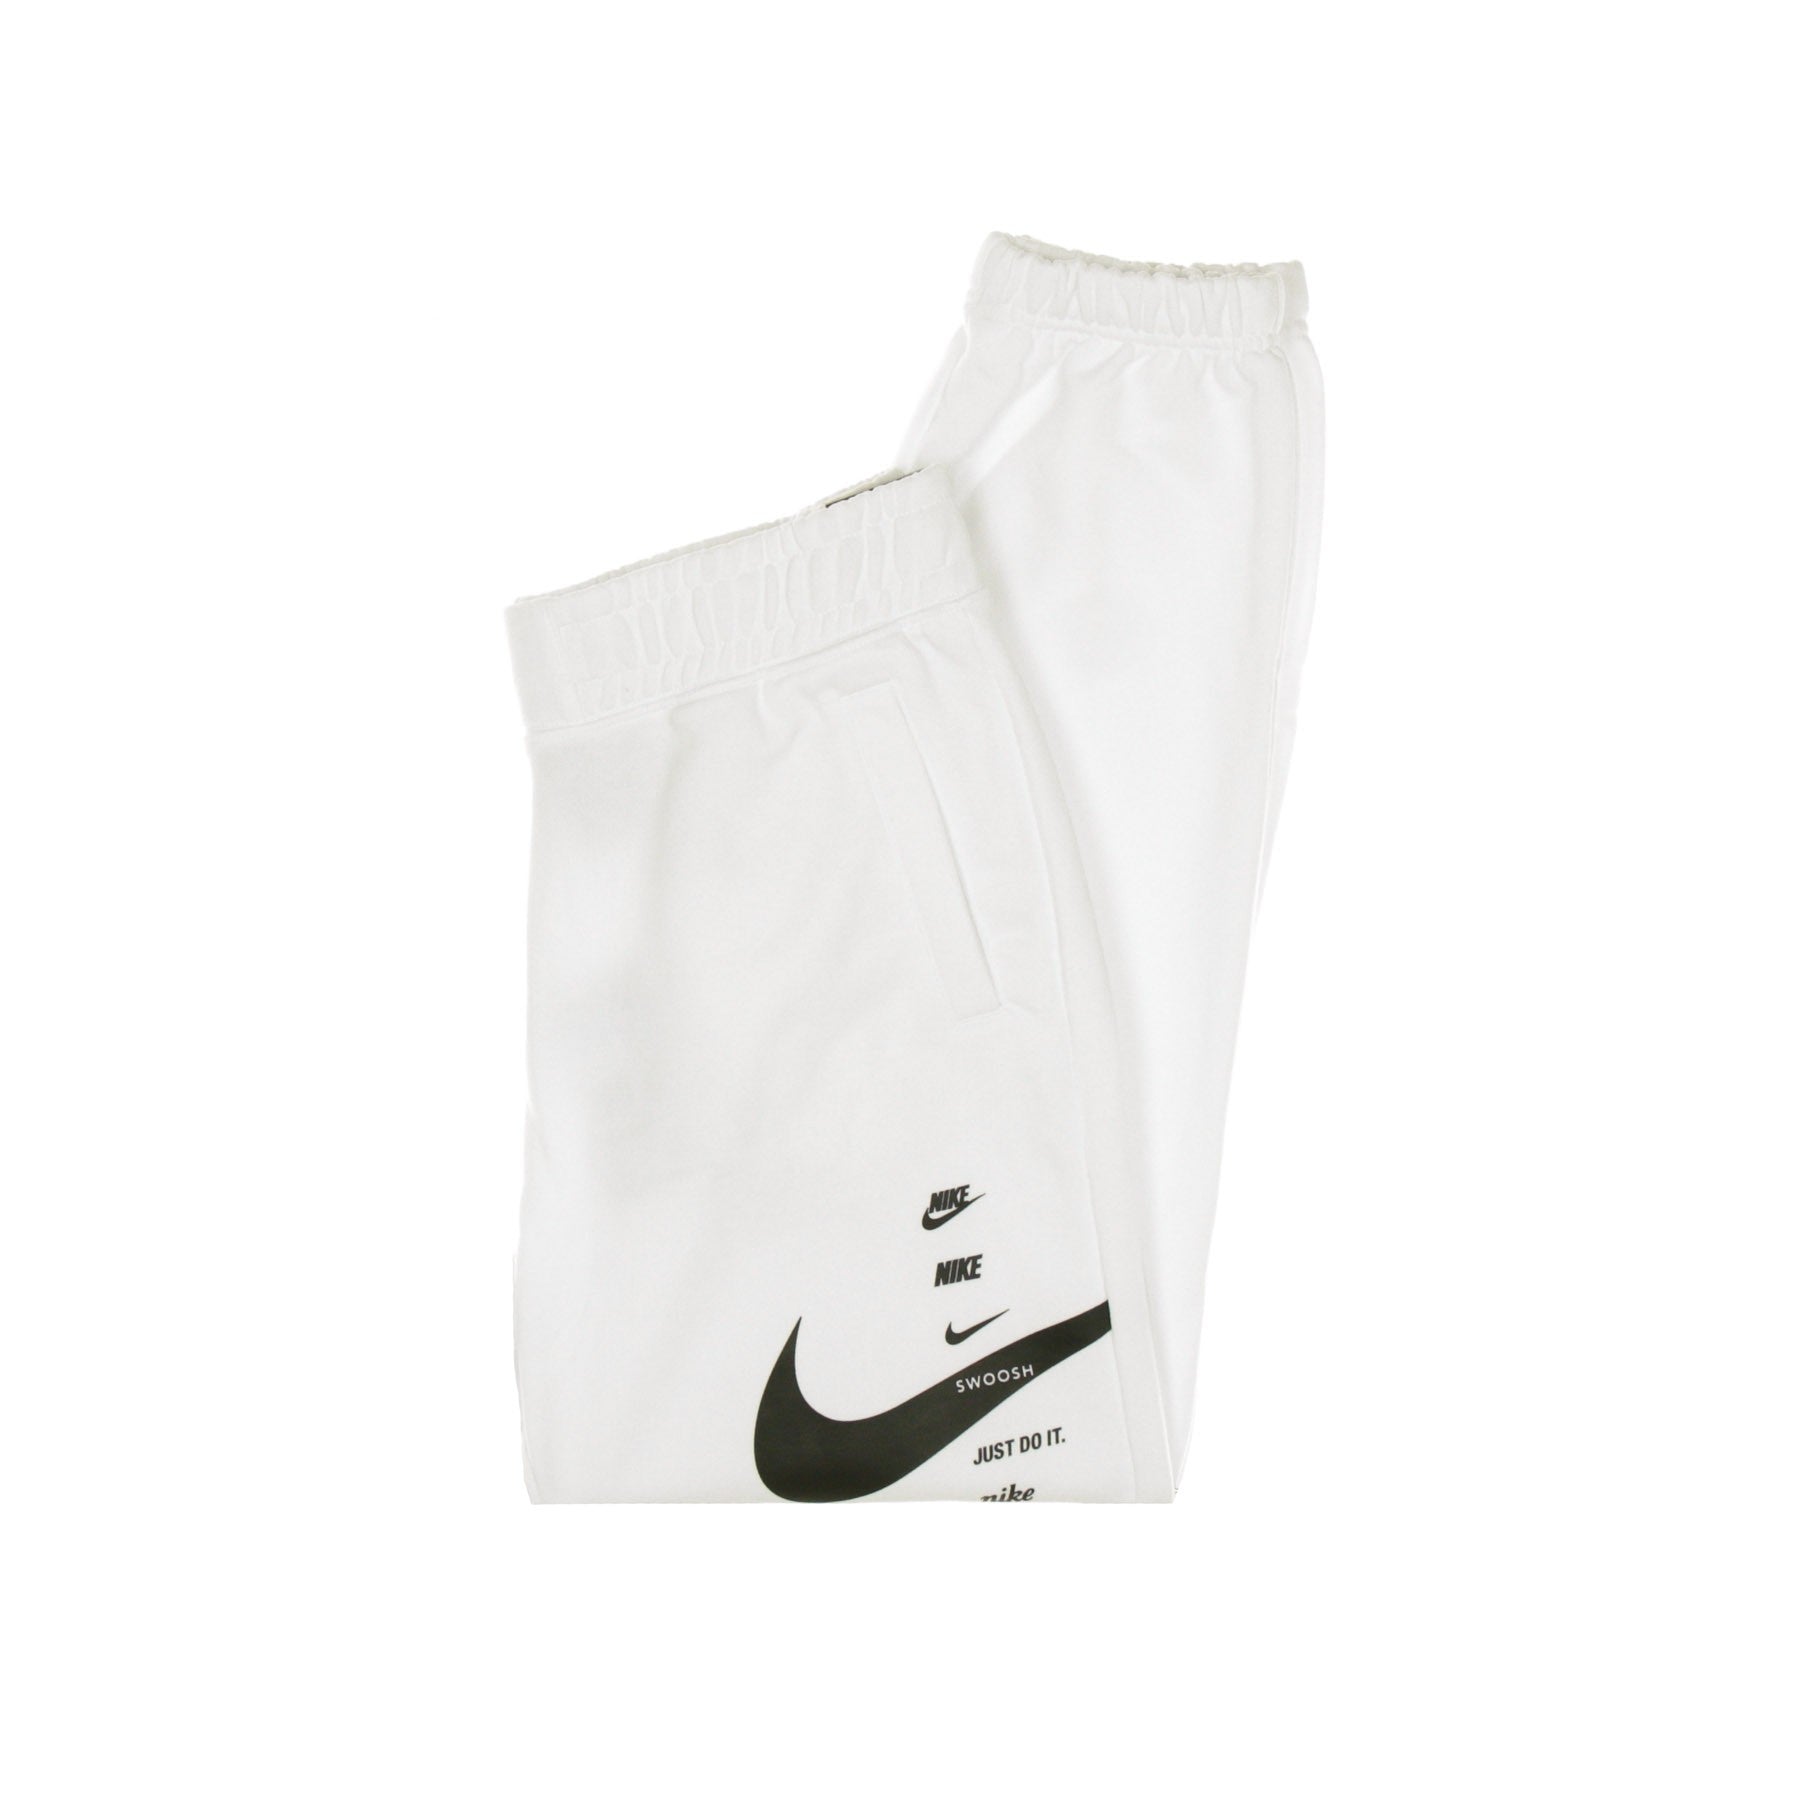 Nike, Pantalone Tuta Felpato Donna Sportswear Swoosh, White/black